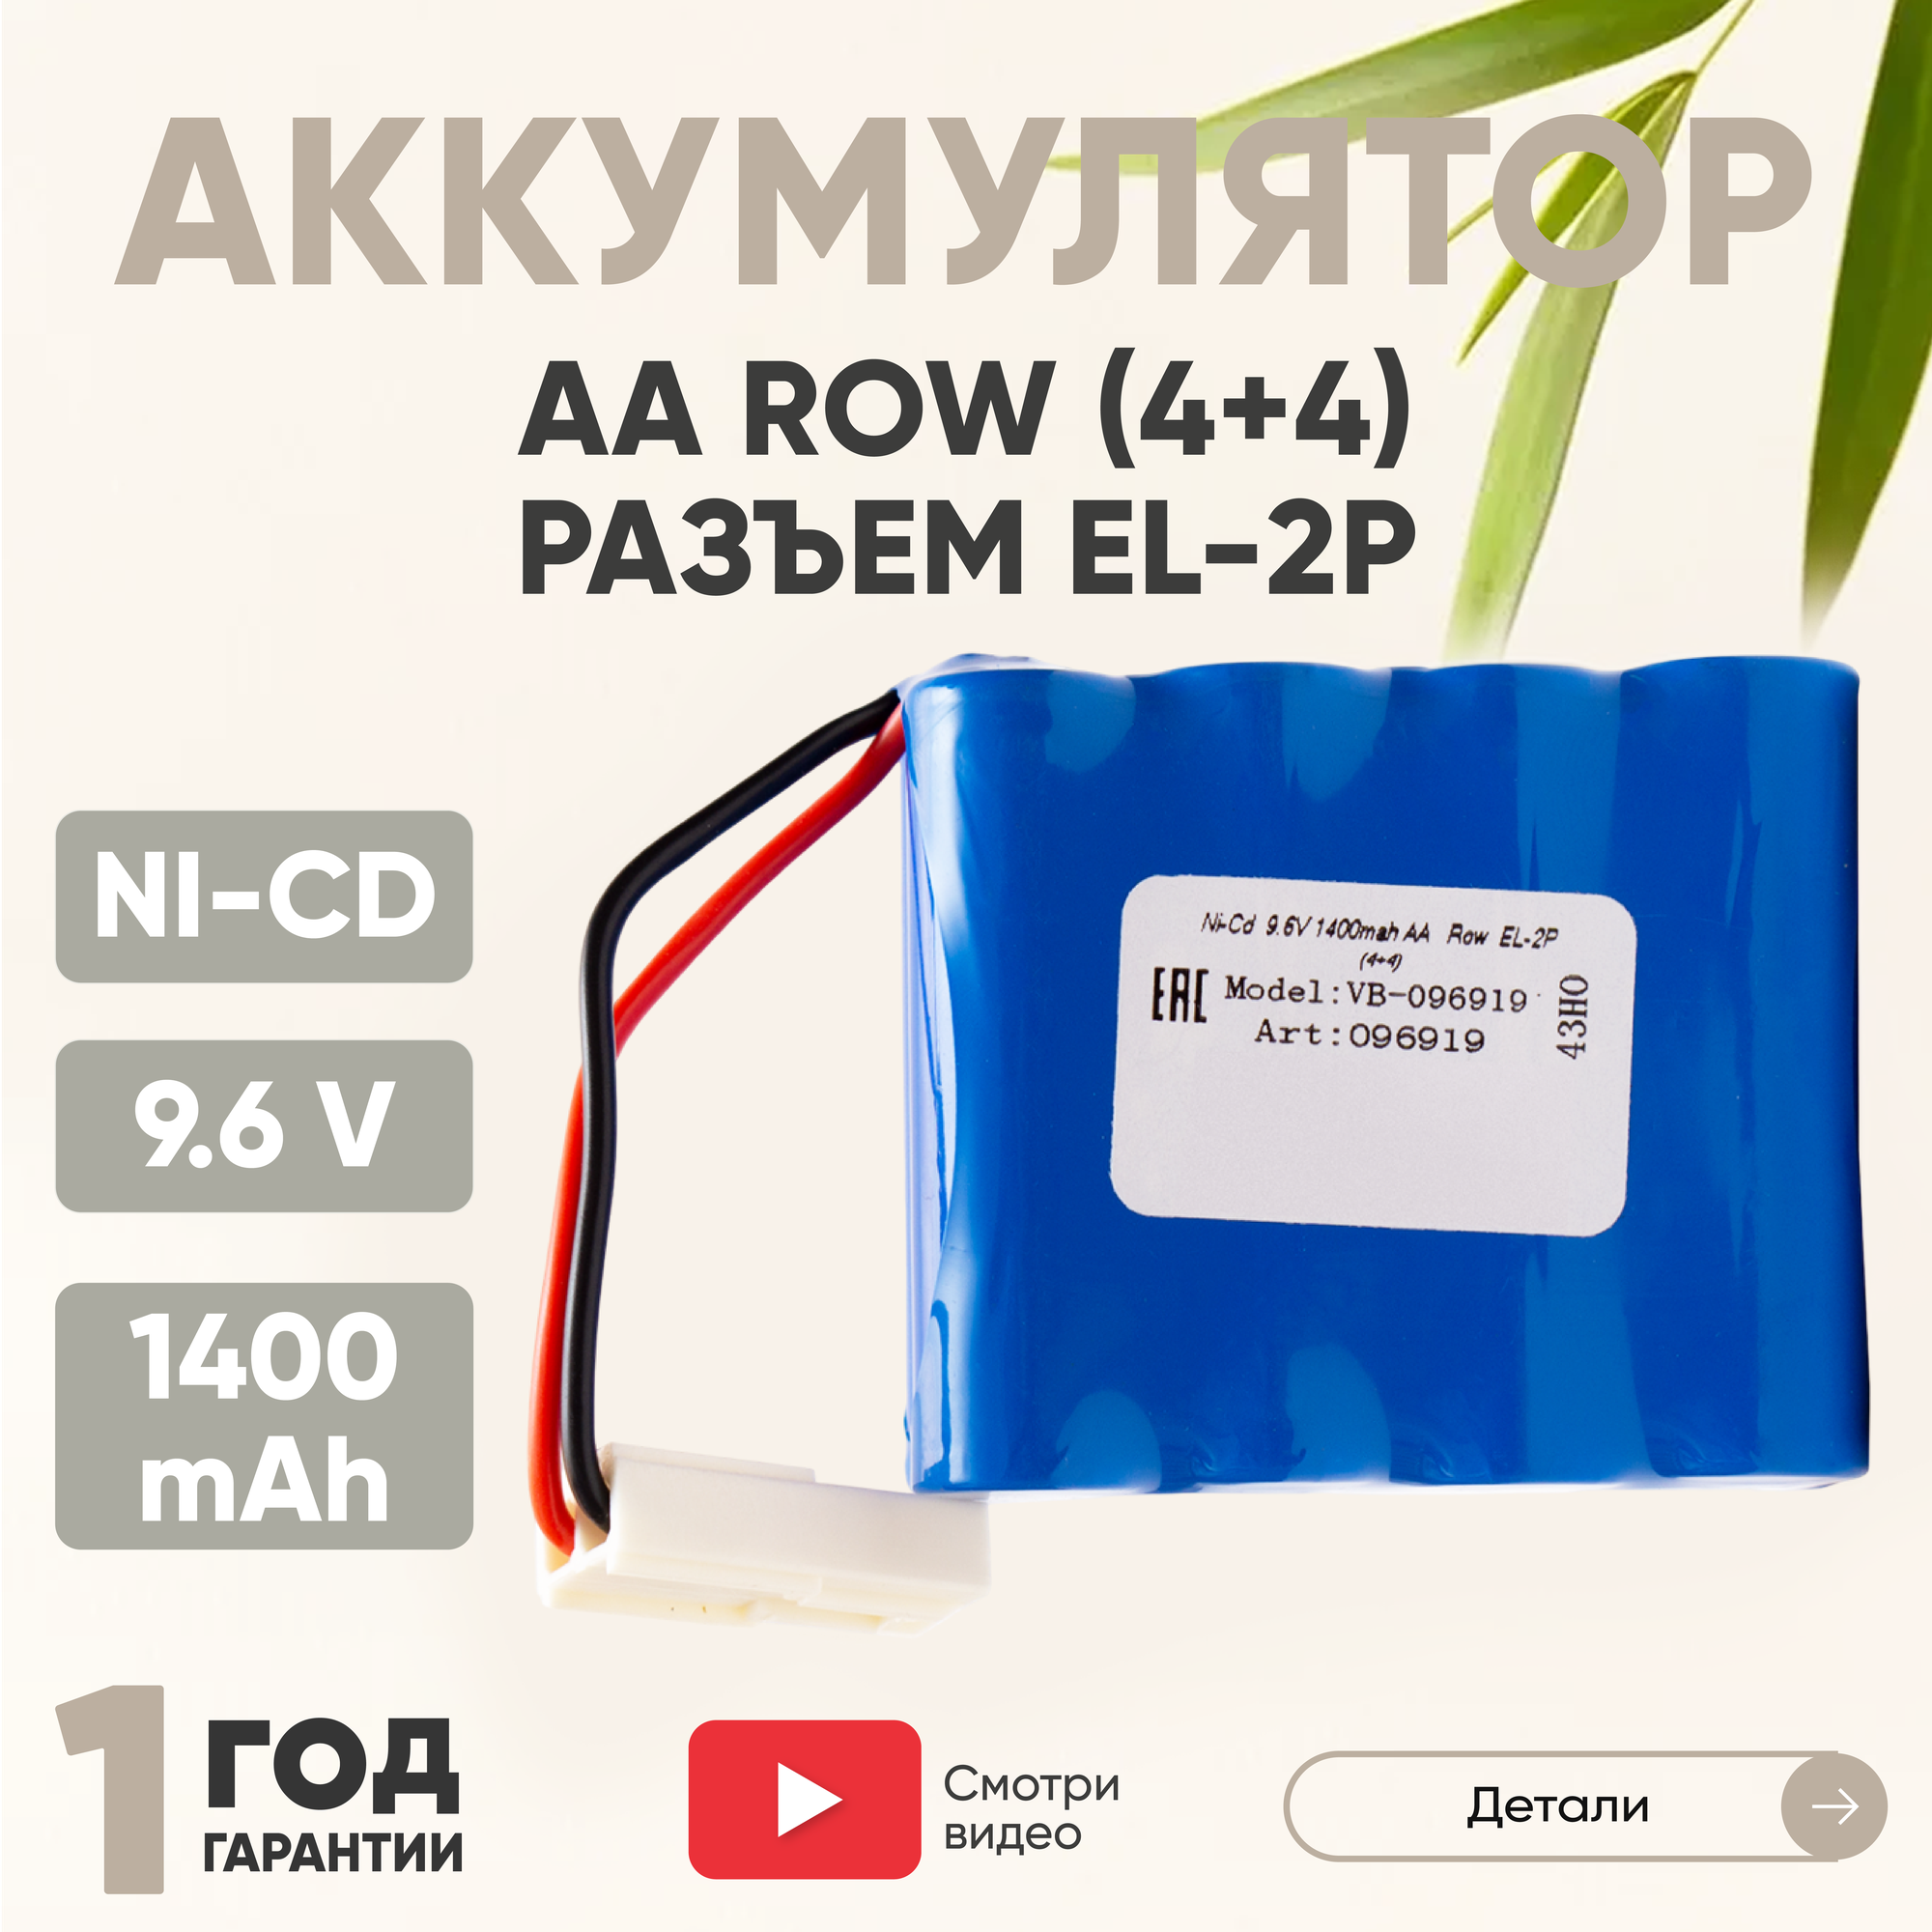 Аккумуляторная батарея (АКБ, аккумулятор) AA Row, разъем EL-2P (4+4), 1400мАч, 9.6В, Ni-Cd